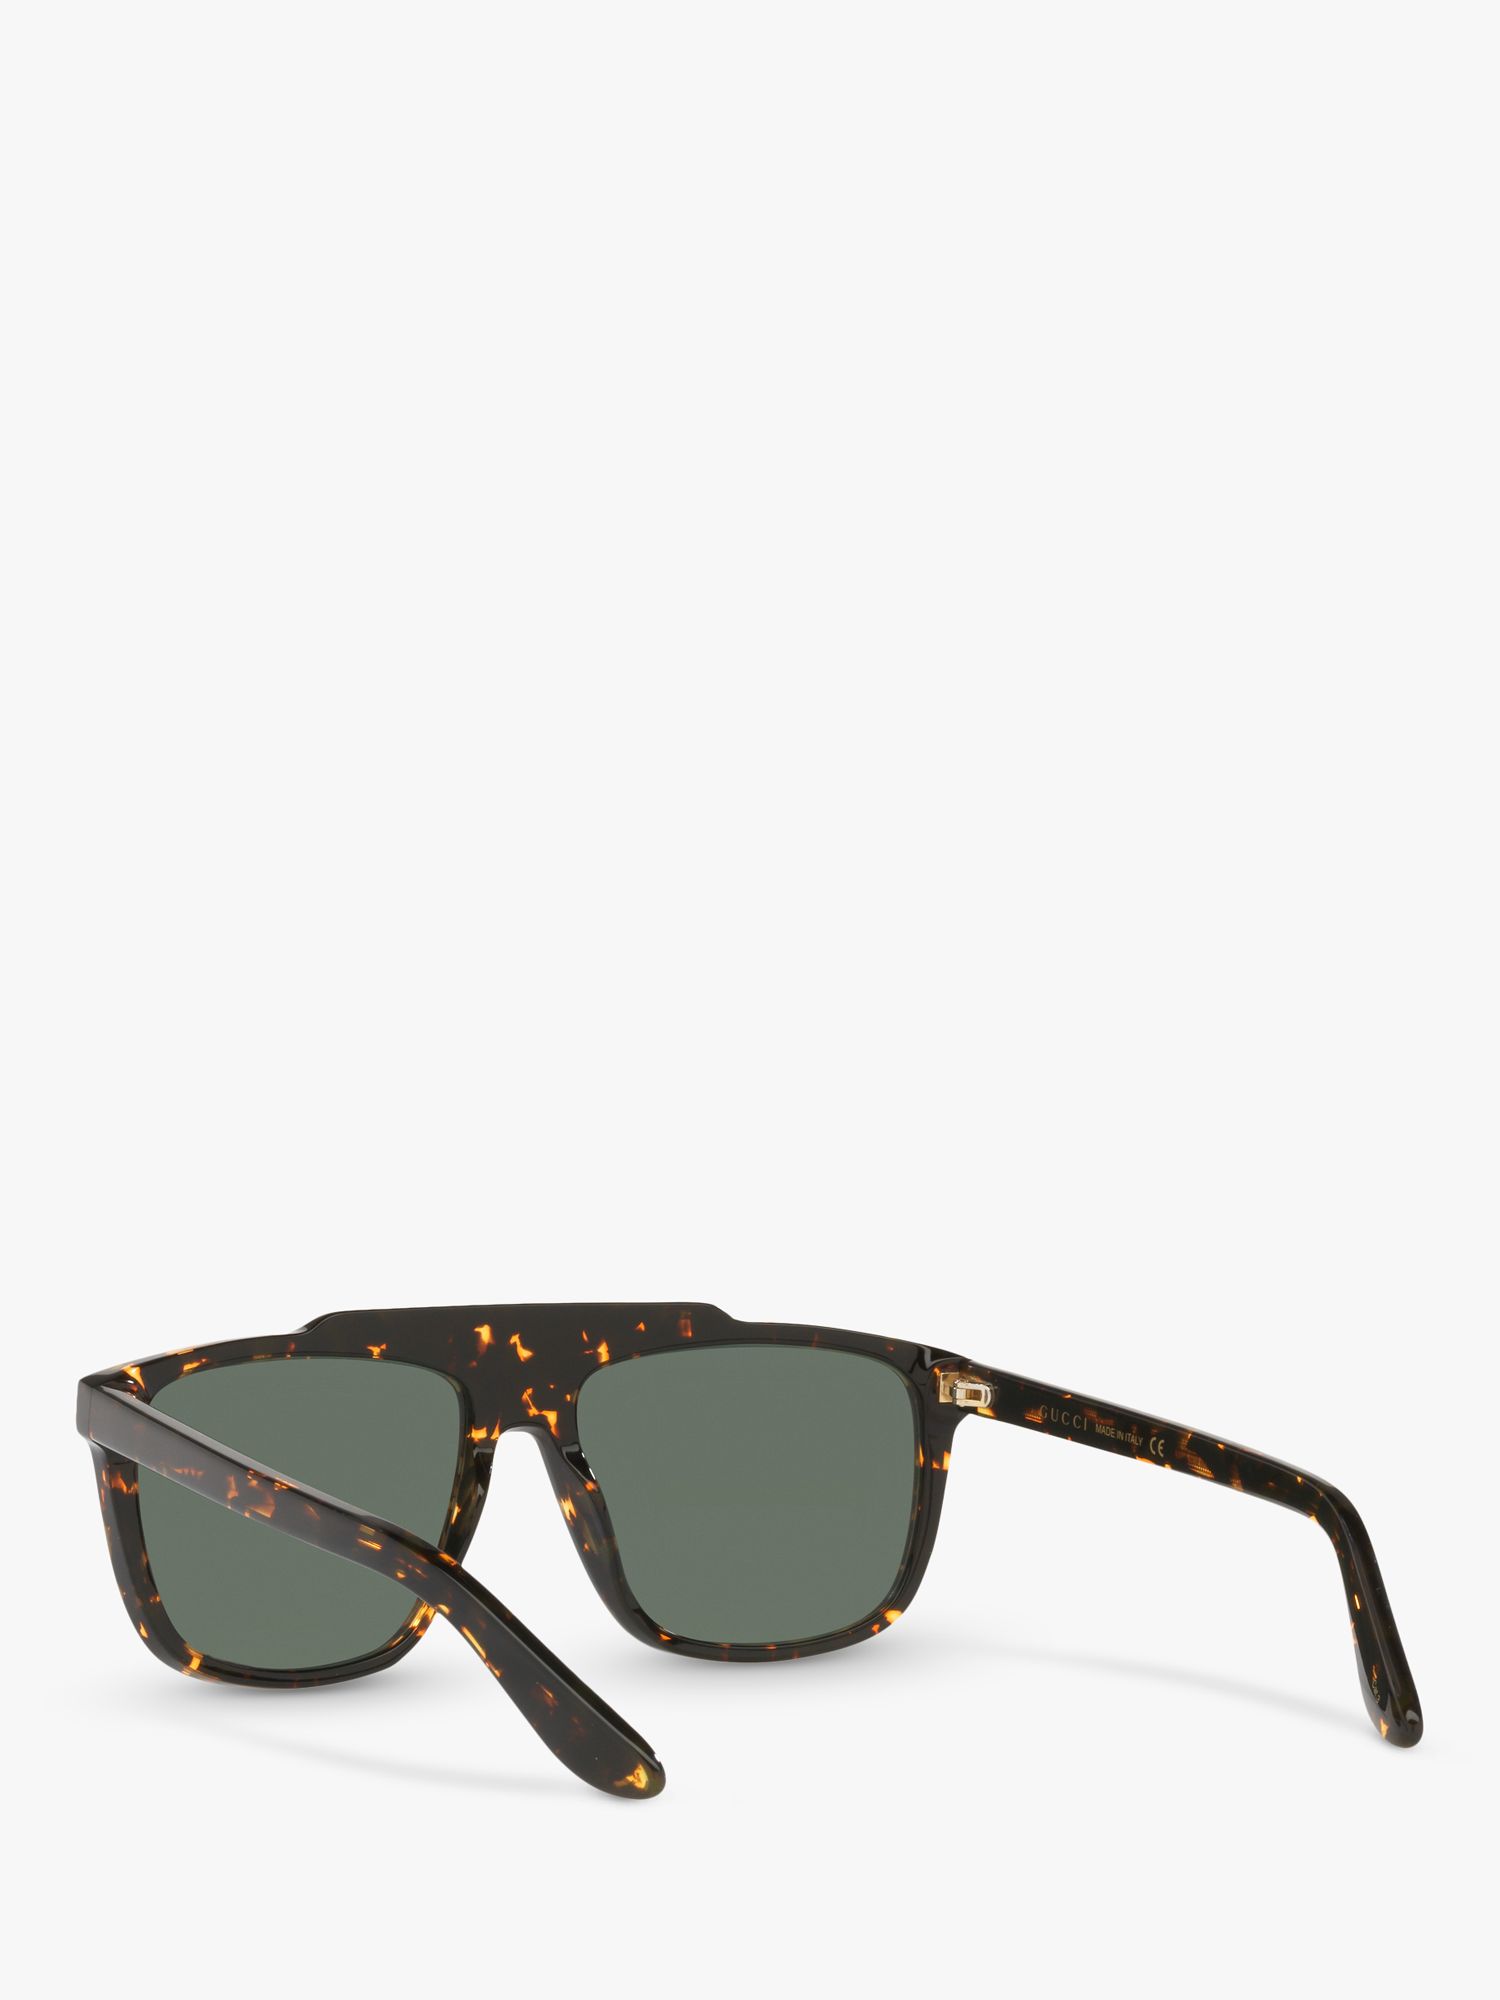 Gucci Gg1039s Men S Aviator Sunglasses Tortoise Grey At John Lewis